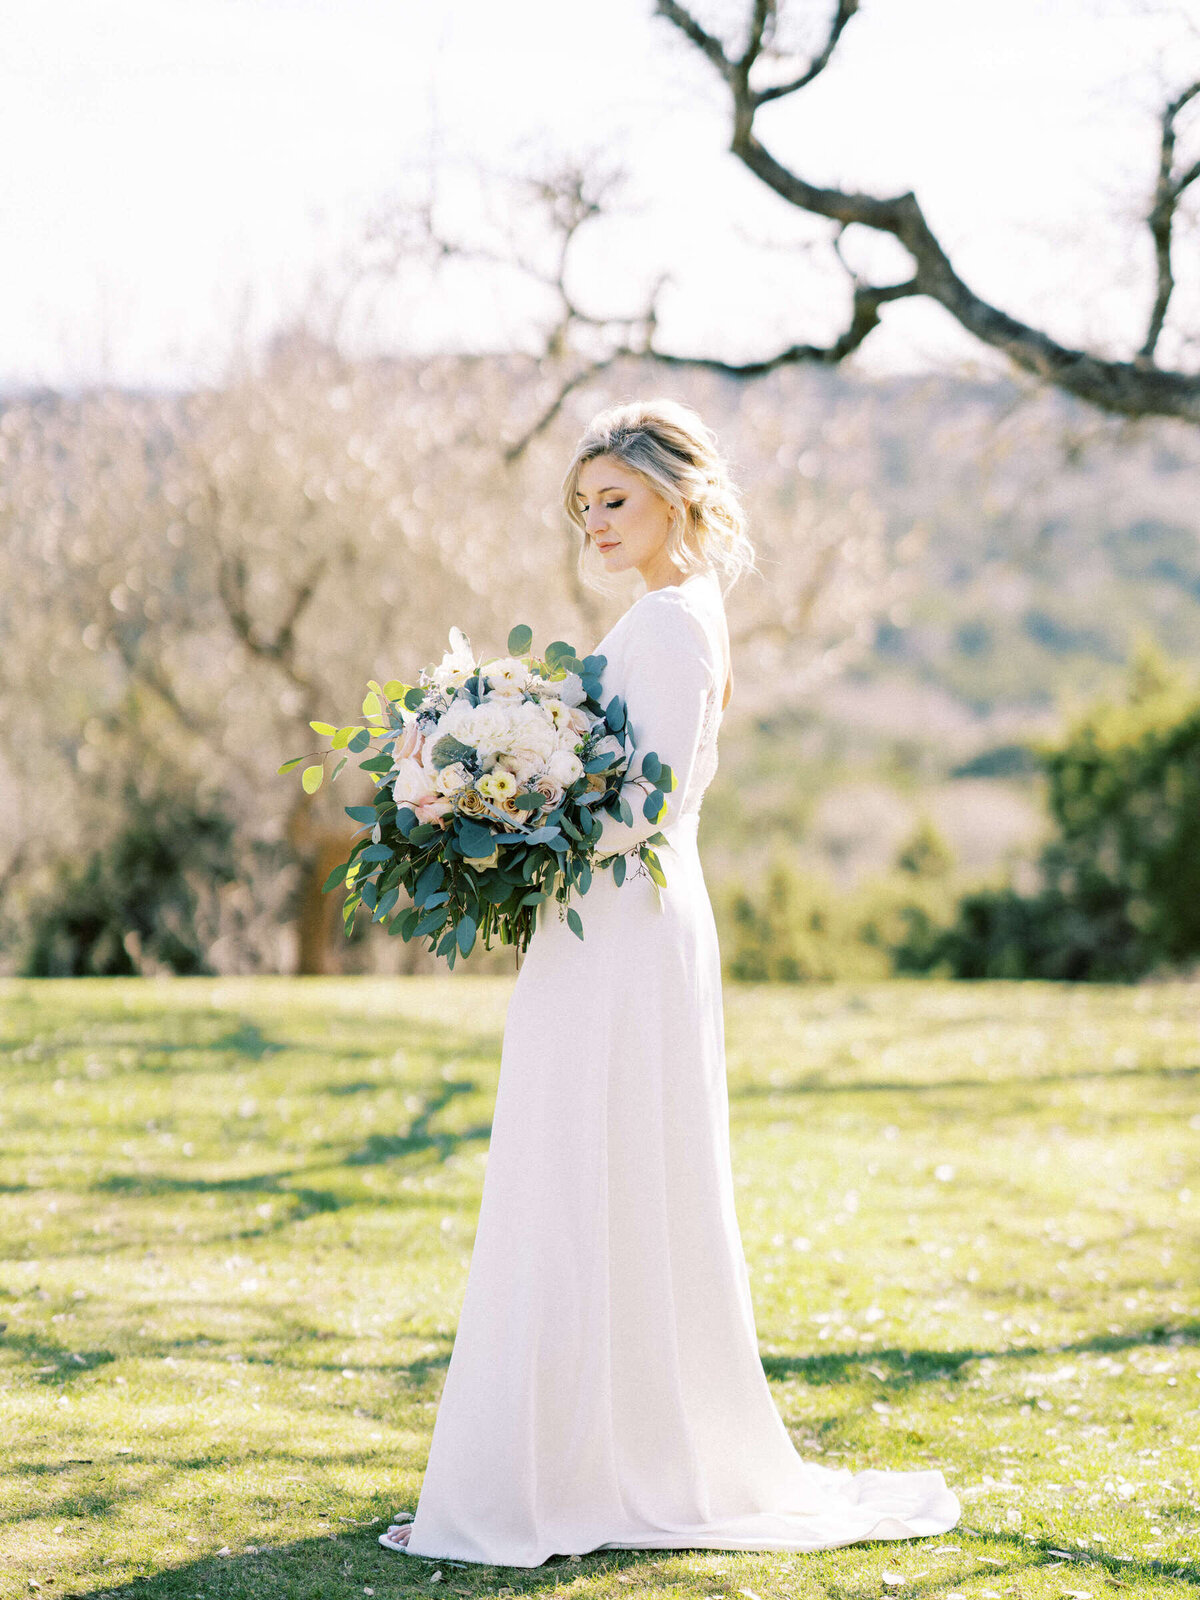 Canyonwood Ridge bridal photography with beautiful greenery and bouquet